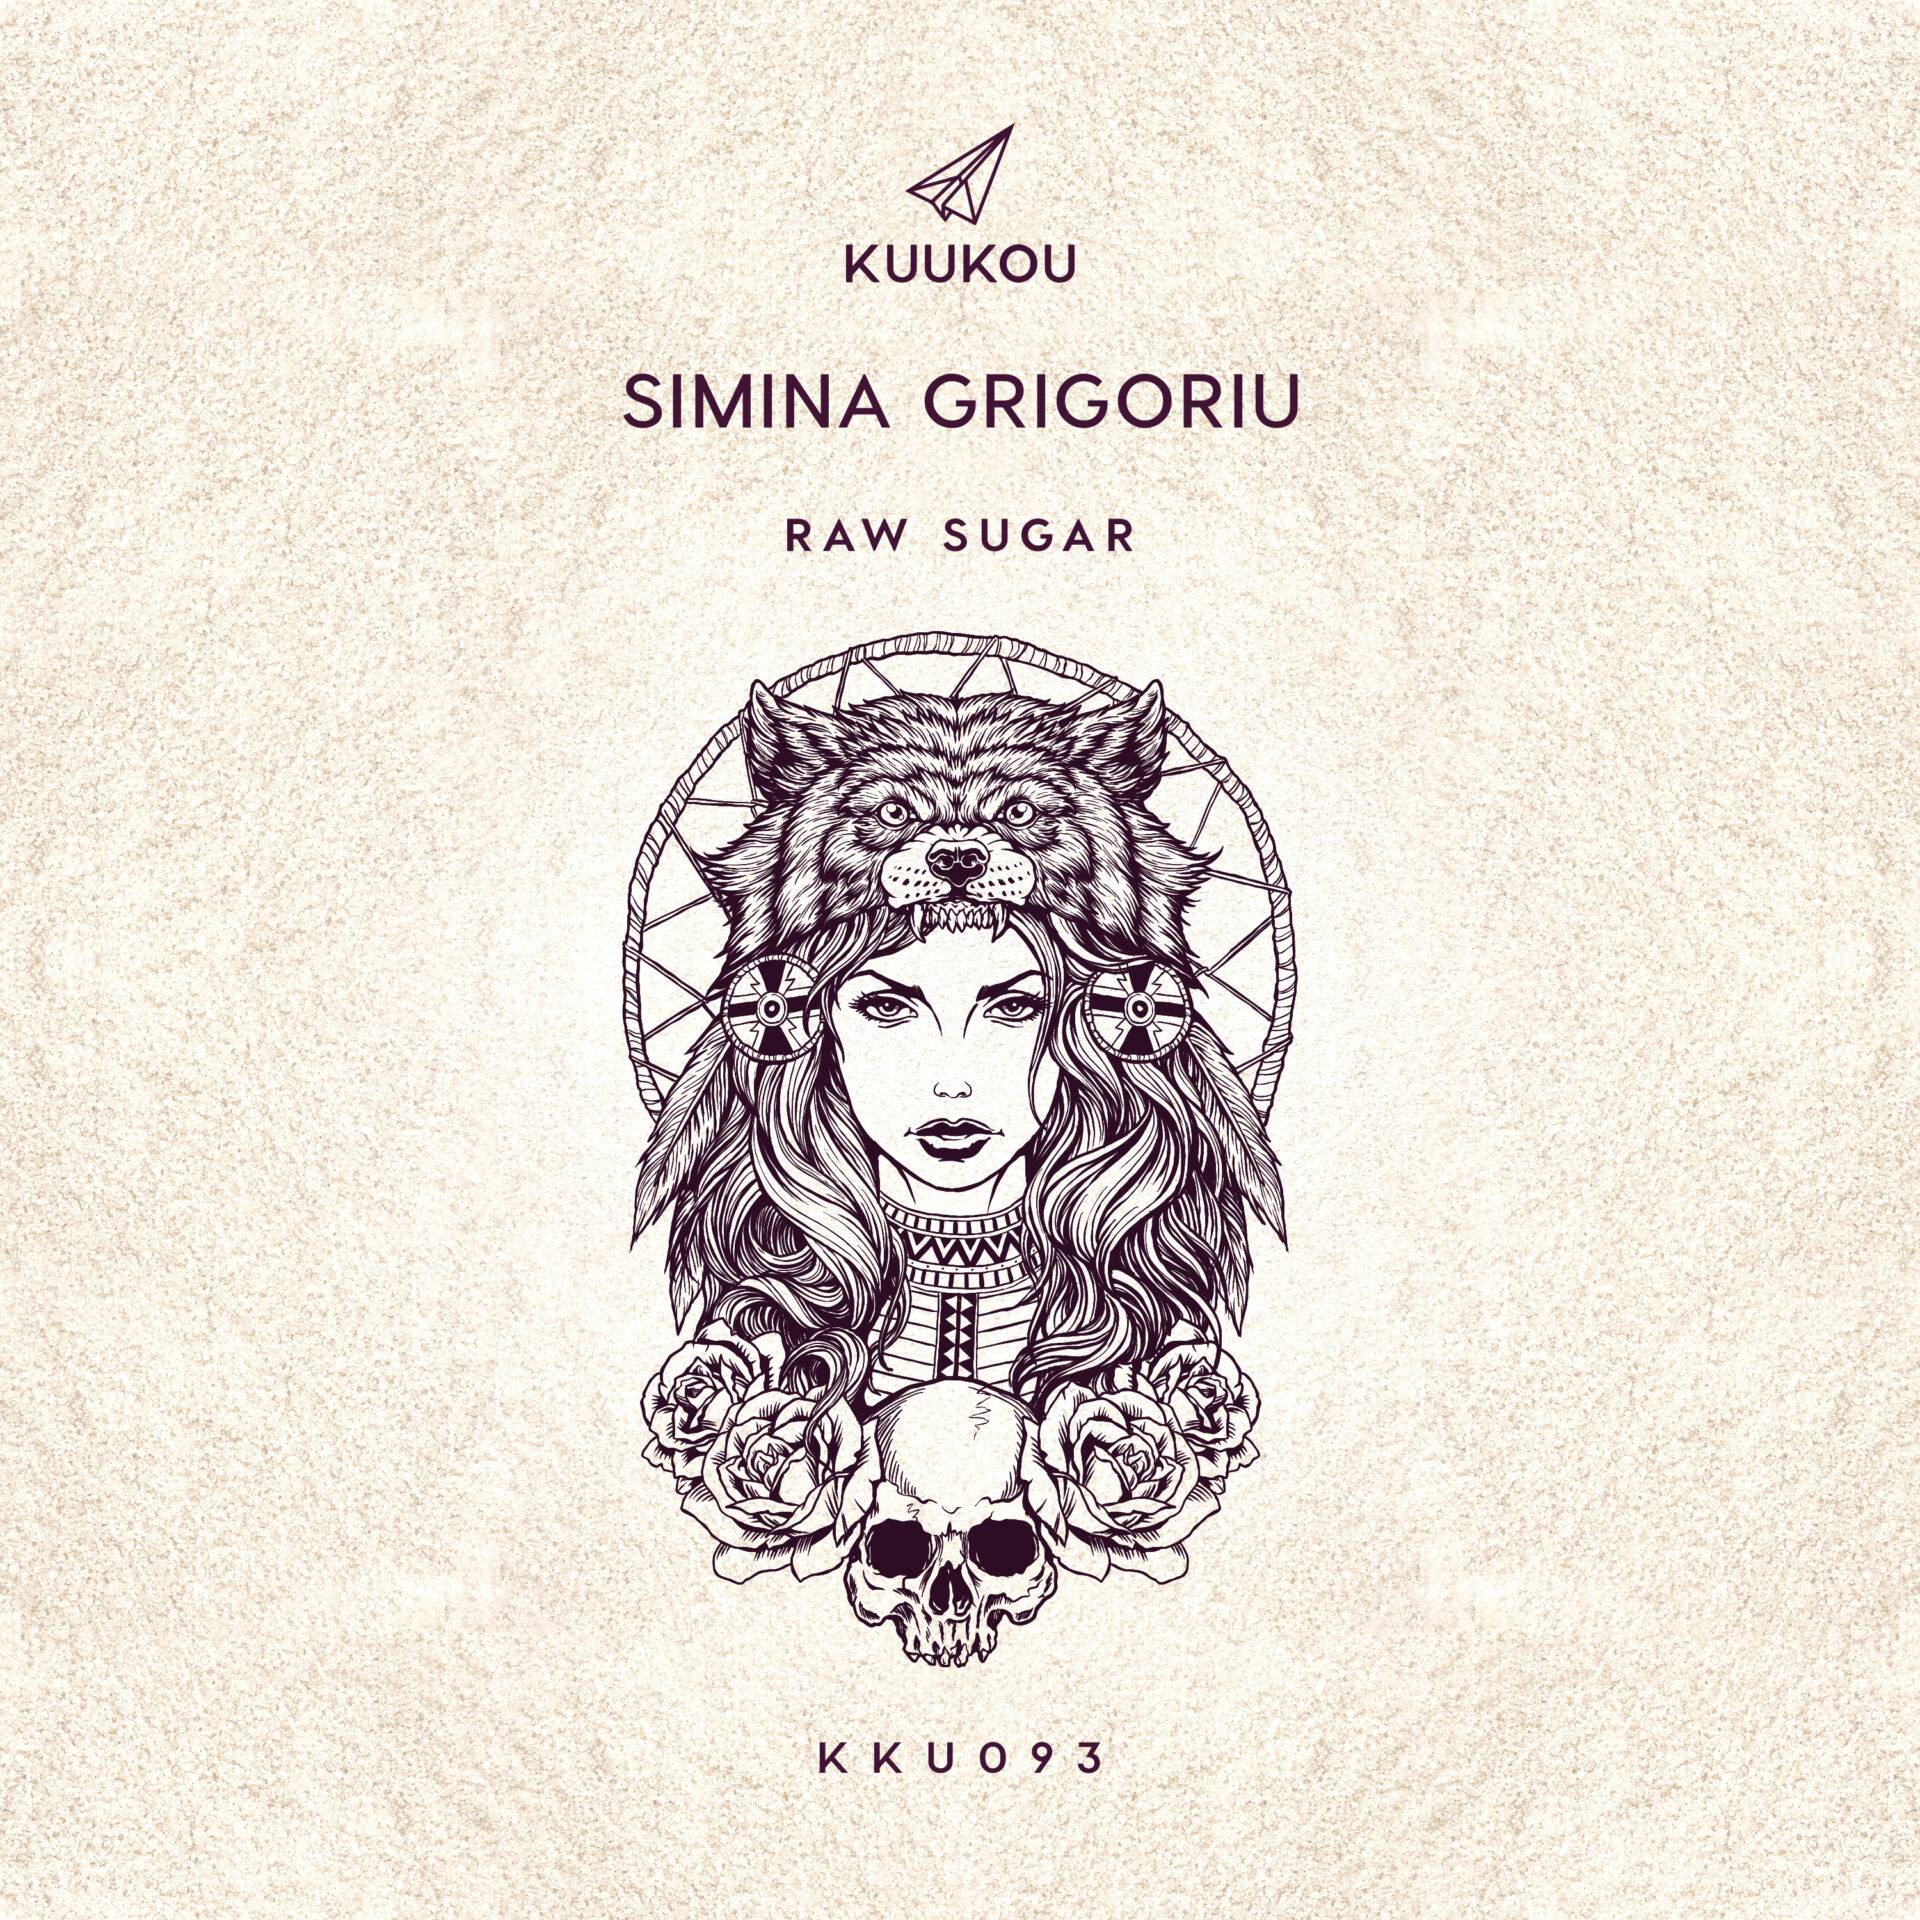 Simina Grigoriu Makes a Triumphant Return with ‘Raw Sugar’ on Kuukou Records